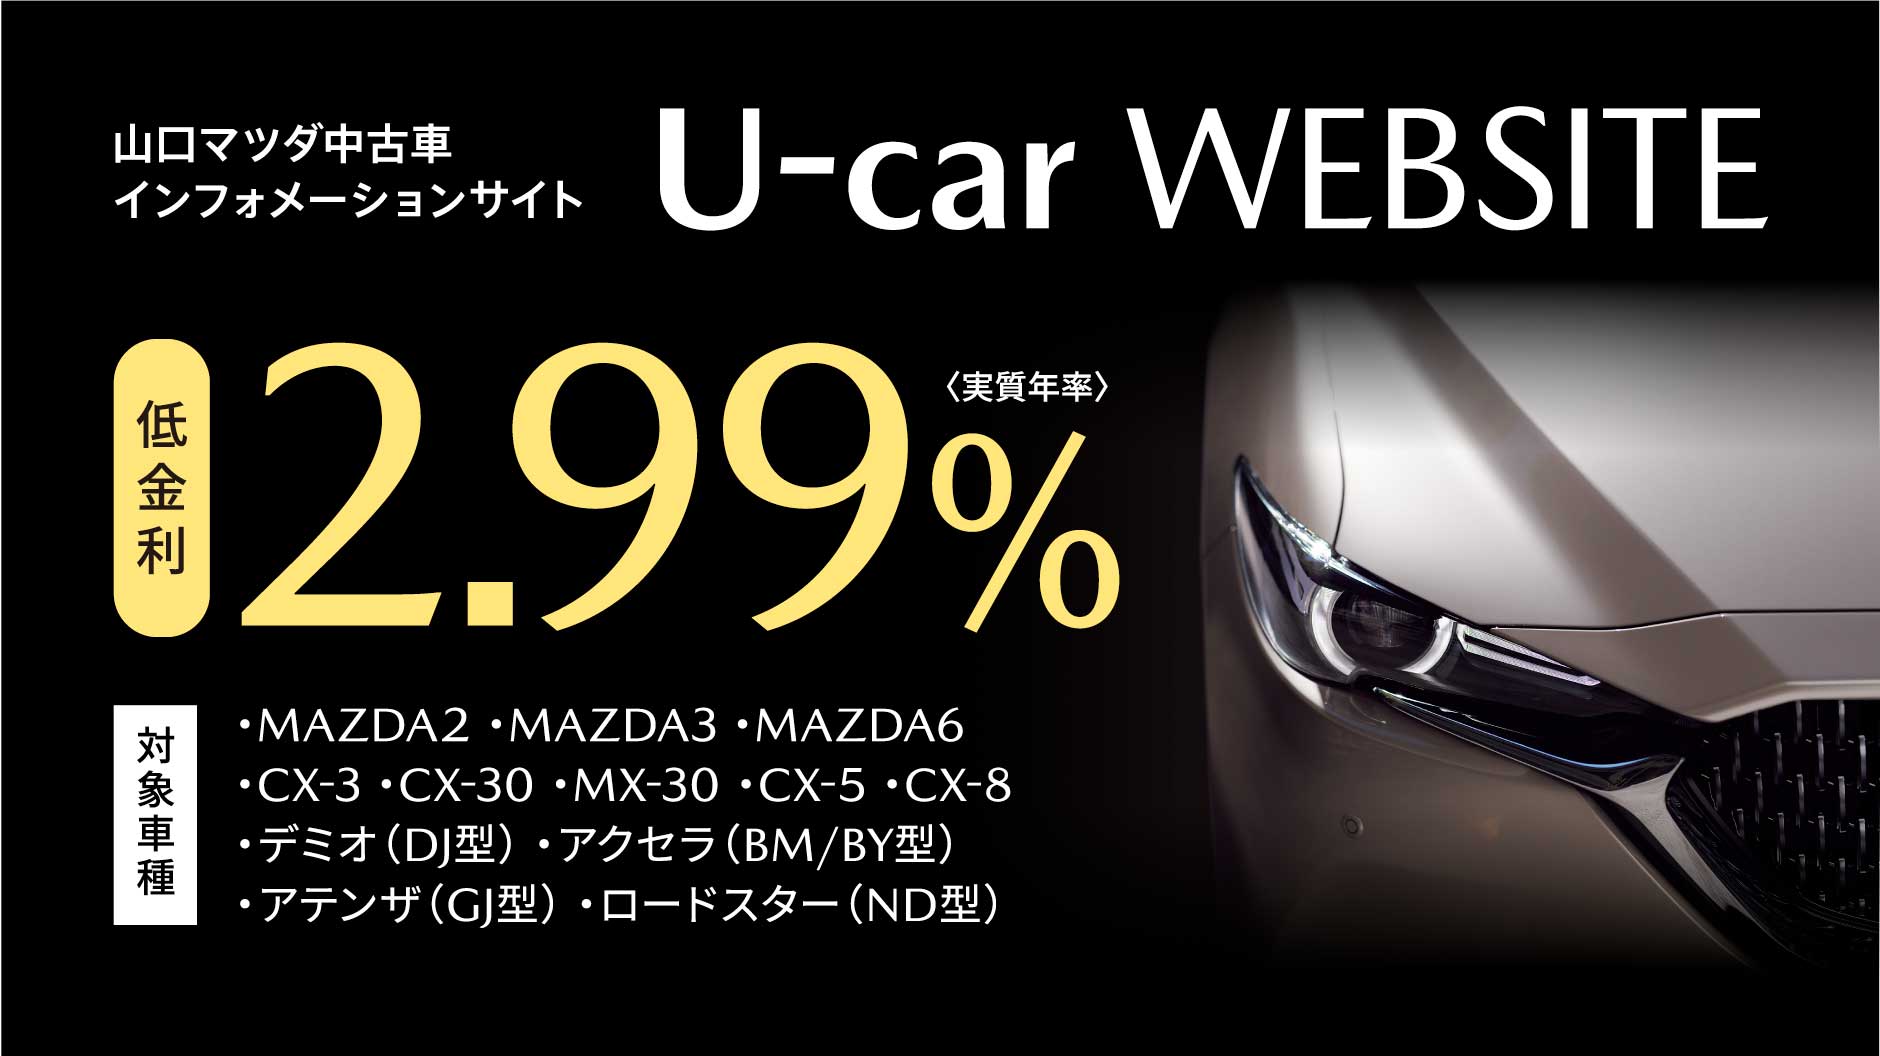 U-car WEBSITE